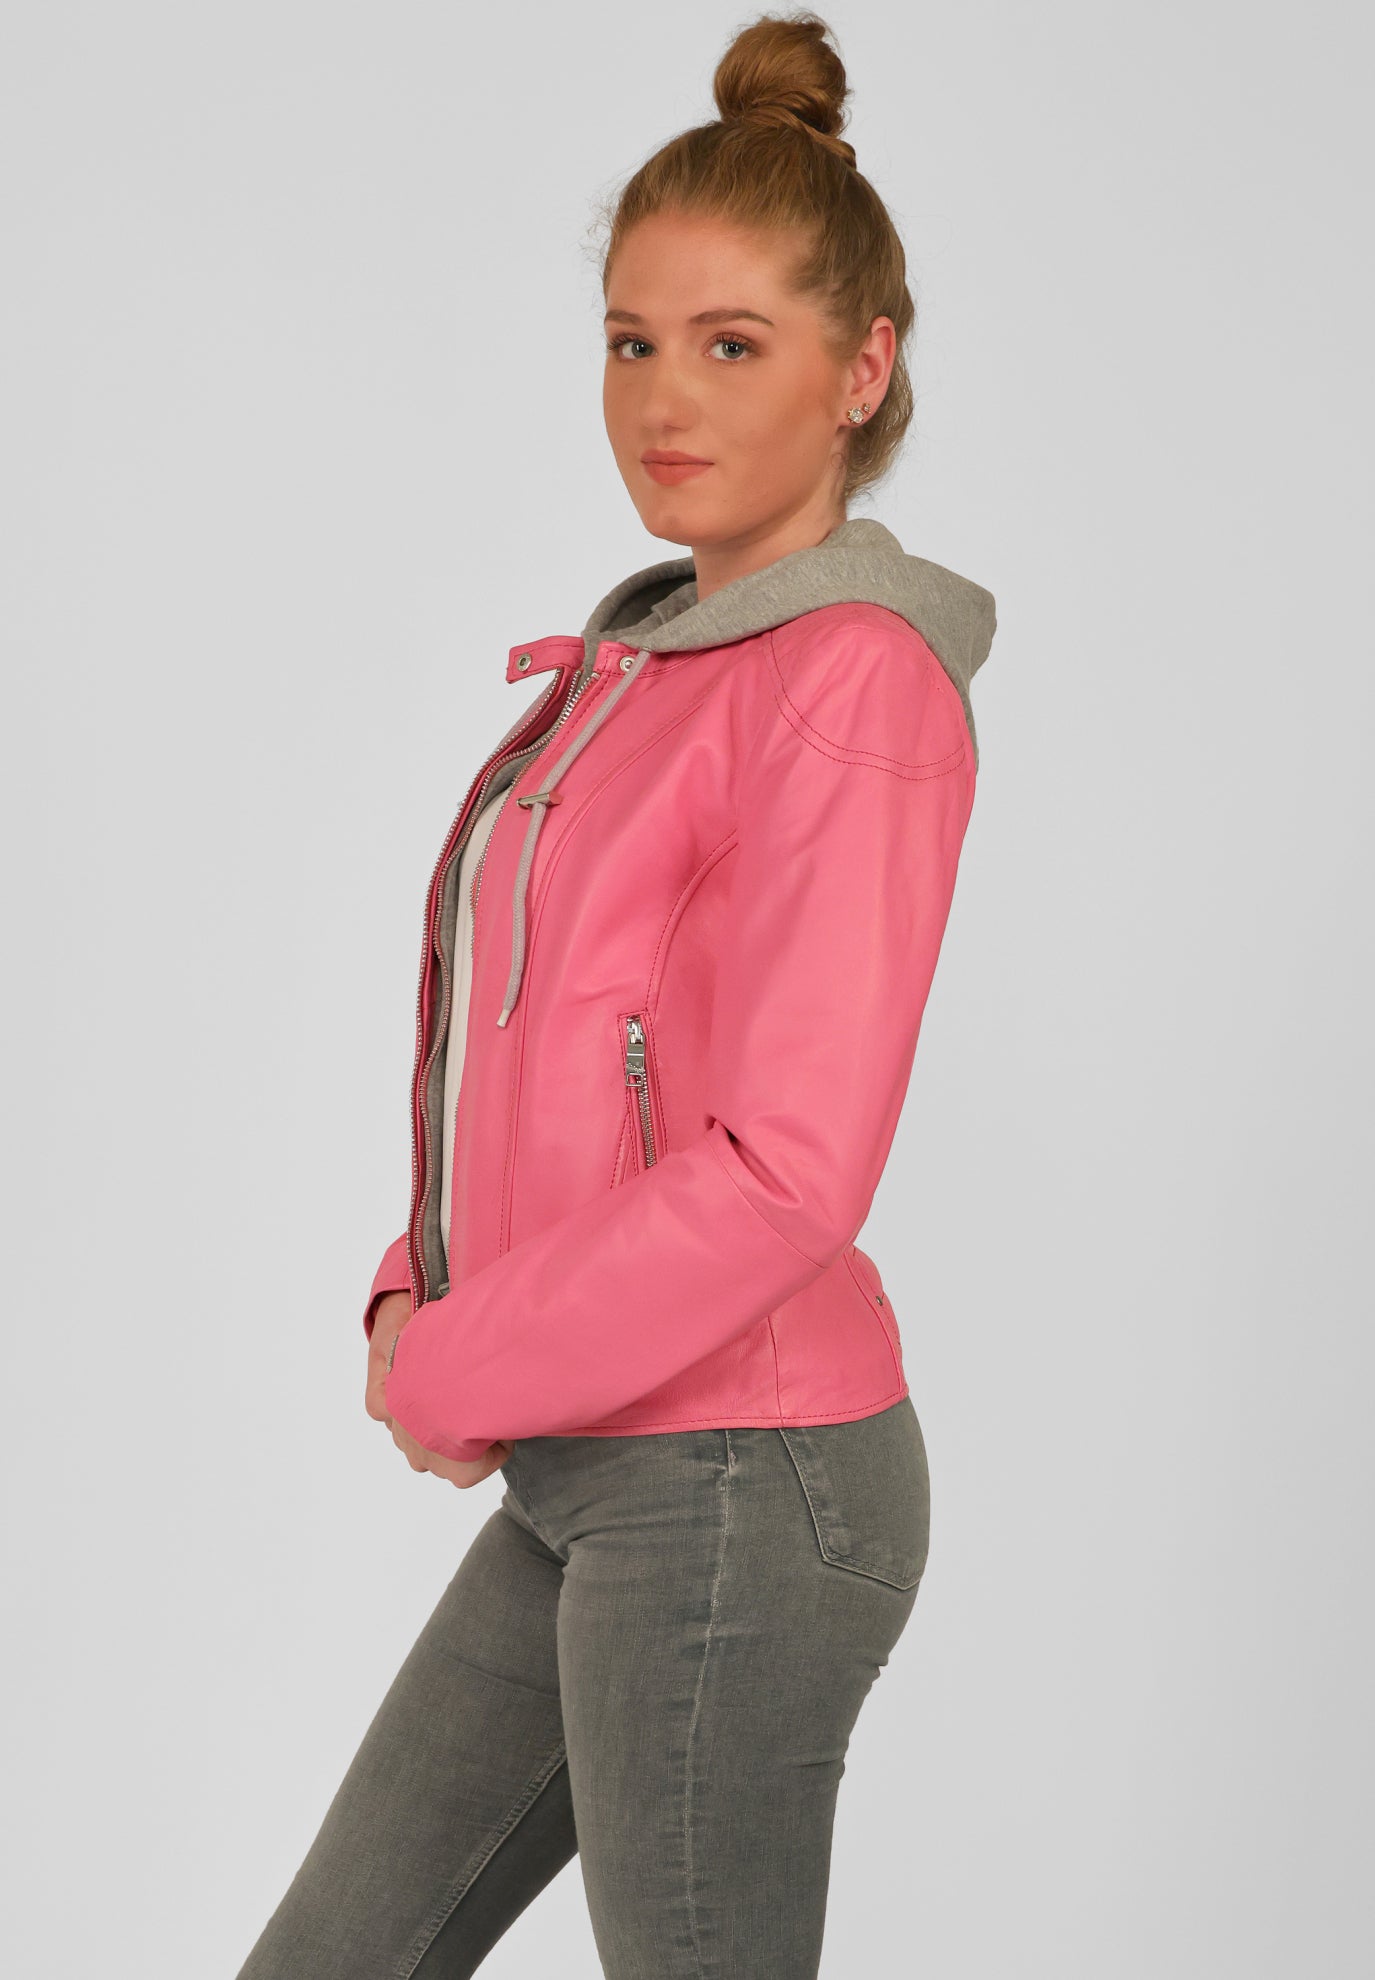 – Online Mico Shop Halle Yeans pink Lederjacke | - Maze |